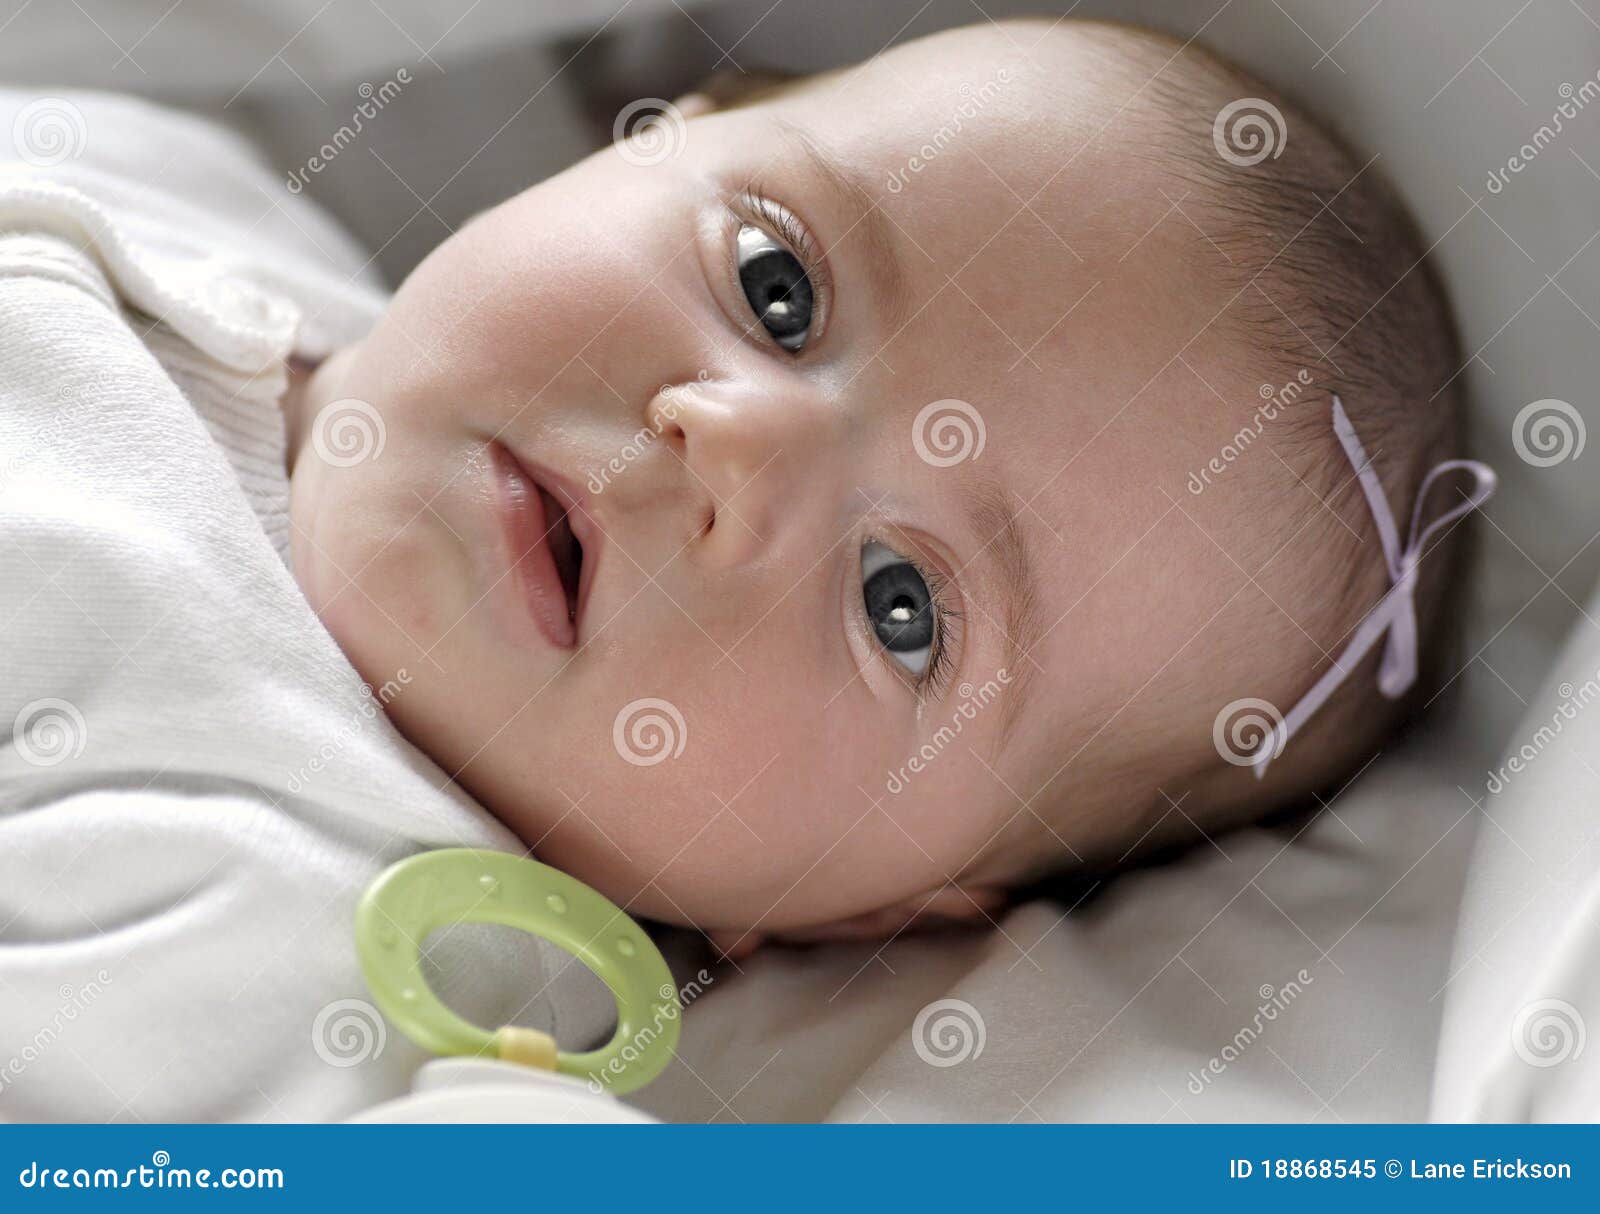 Baby On White Blanket Stock Image Image Of Girl Toddler 18868545